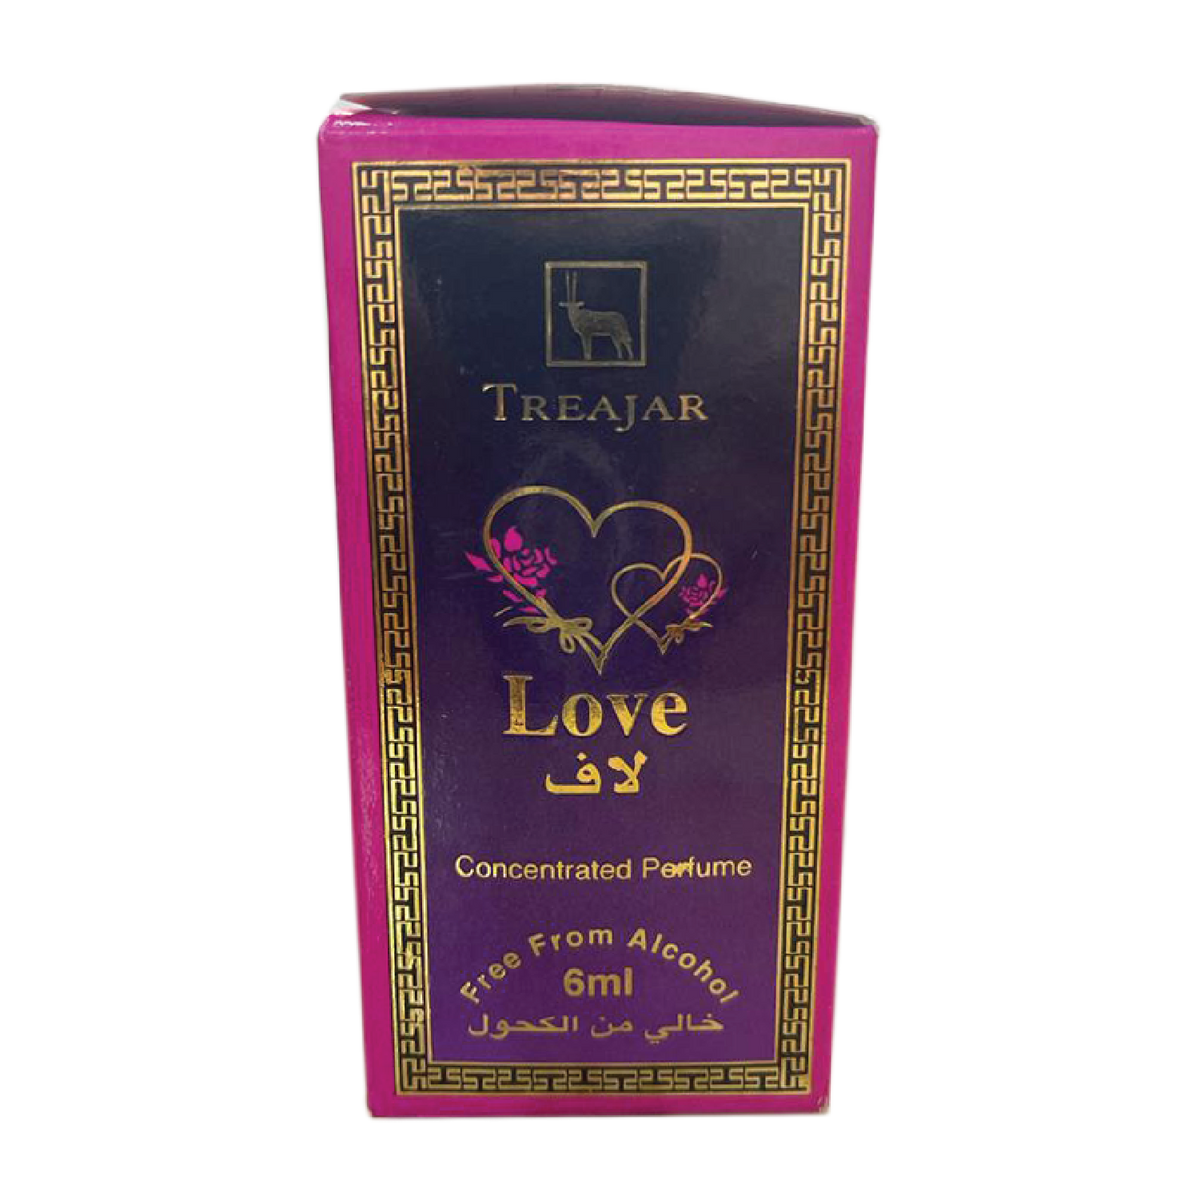 Treajar Concentrated Oil Perfume - Love, 6ml - Pack of 6 Gardenia Cosmotrade LLP